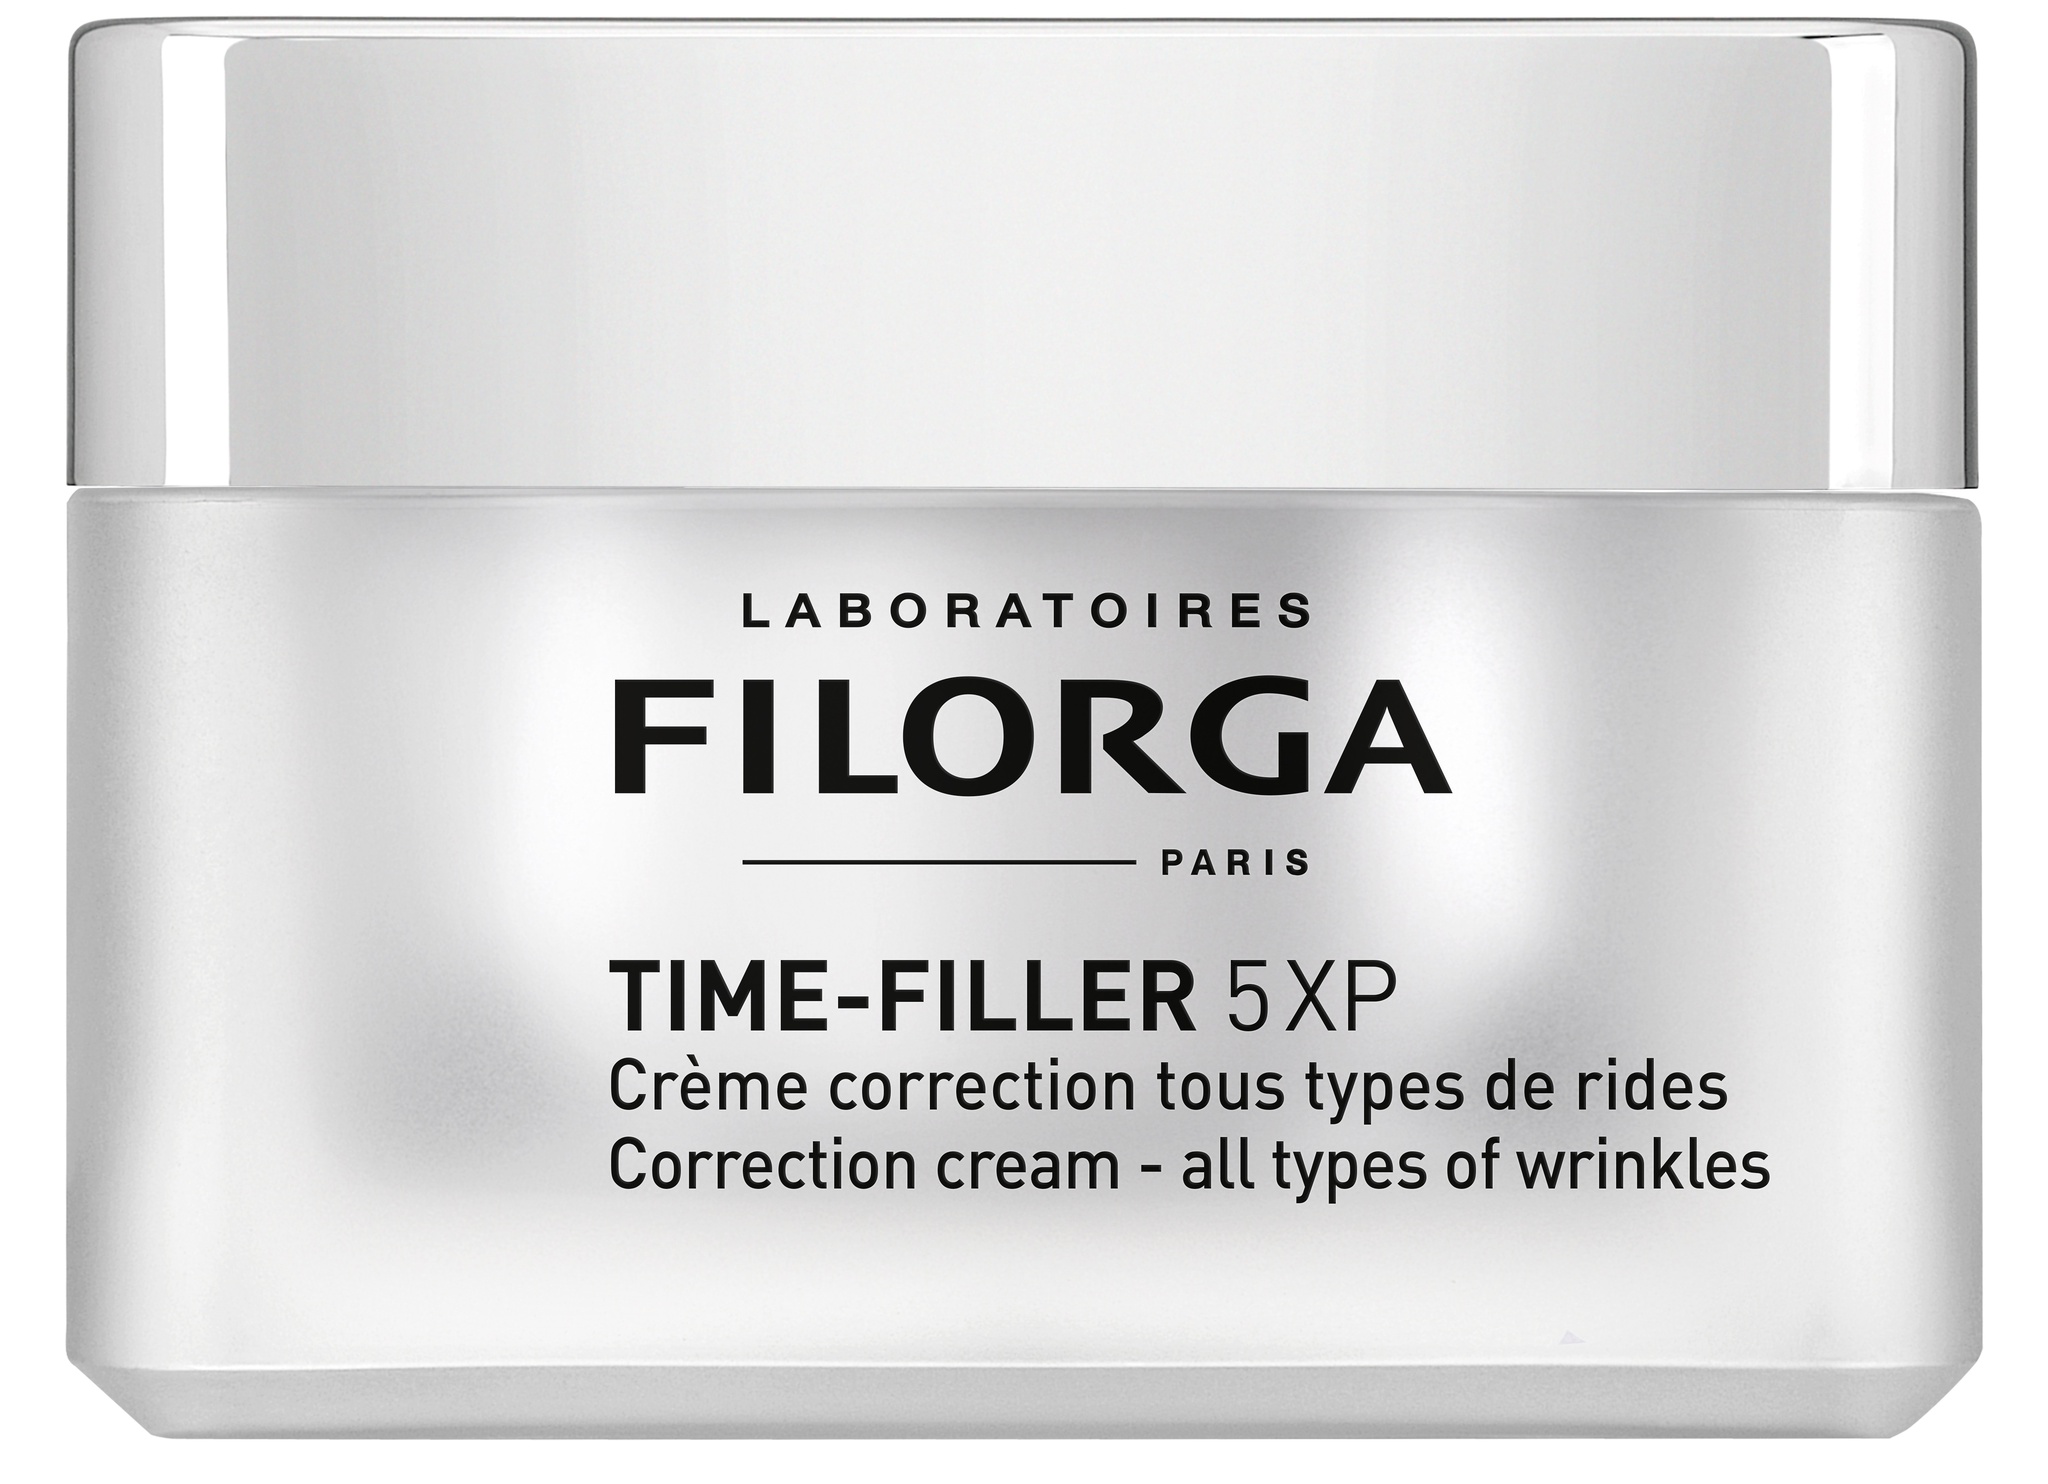 Filorga Laboratories Time Filler 5xp